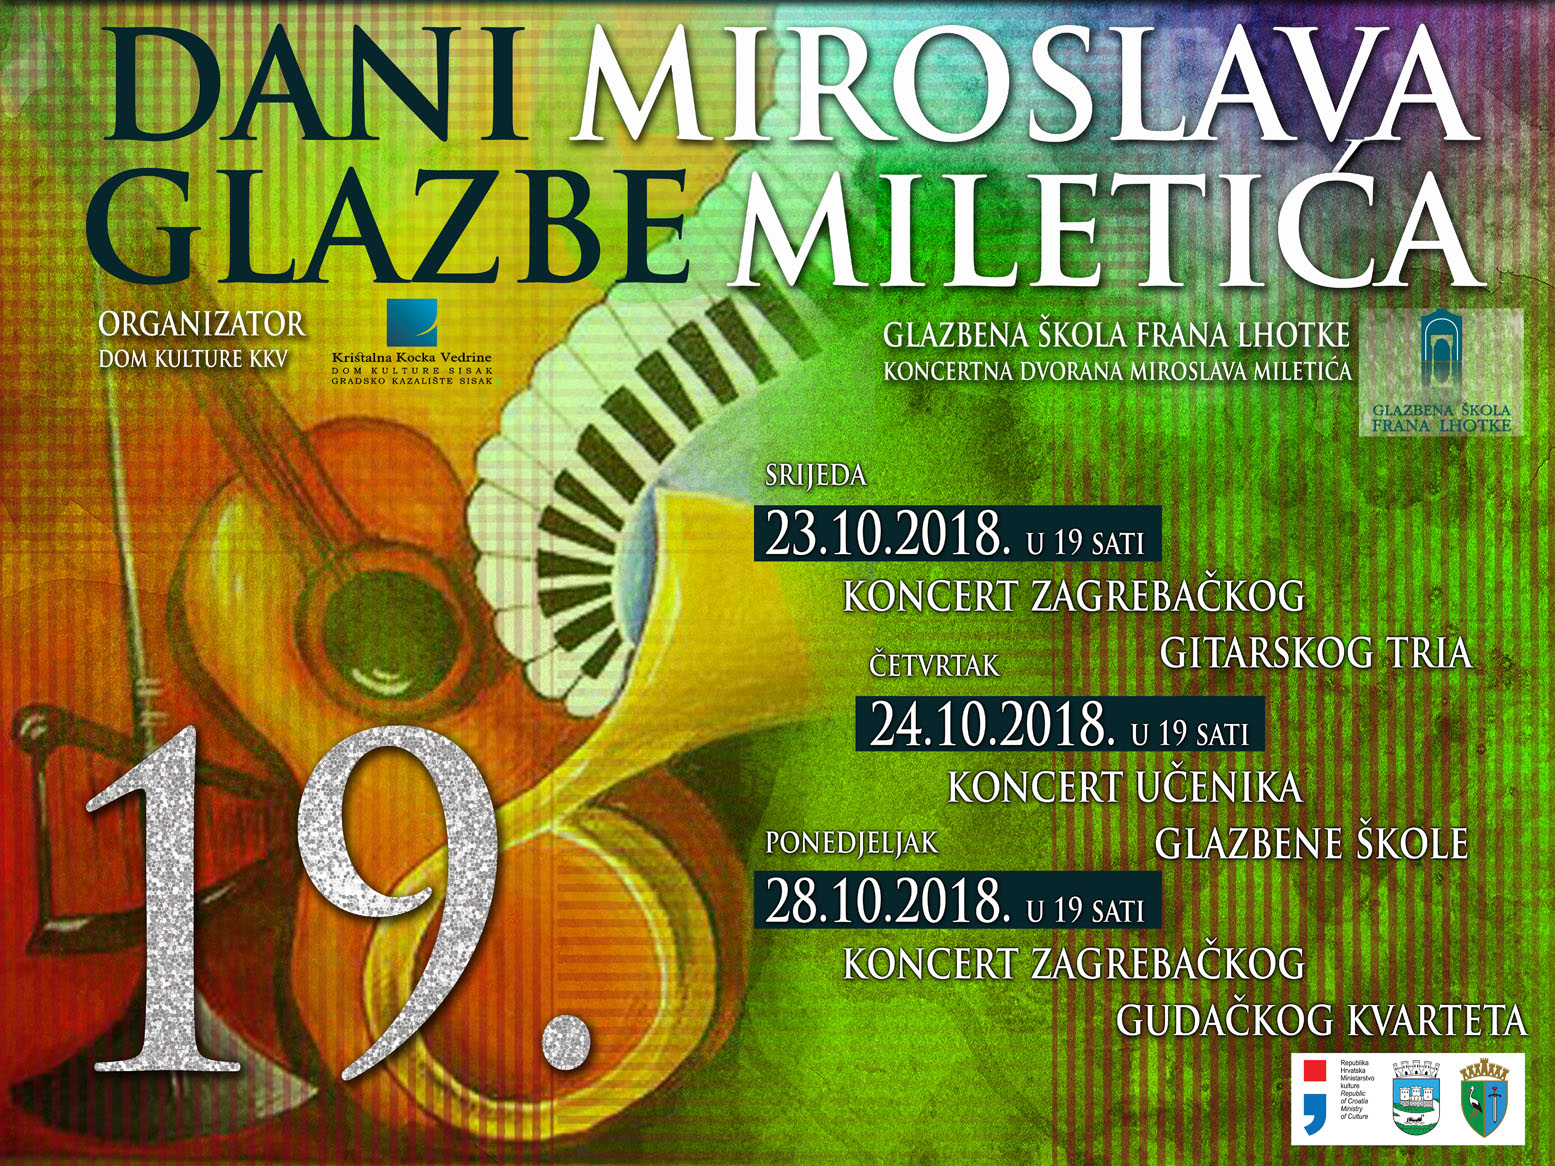 You are currently viewing 19. DANI GLAZBE MIROSLAVA MILETIĆA